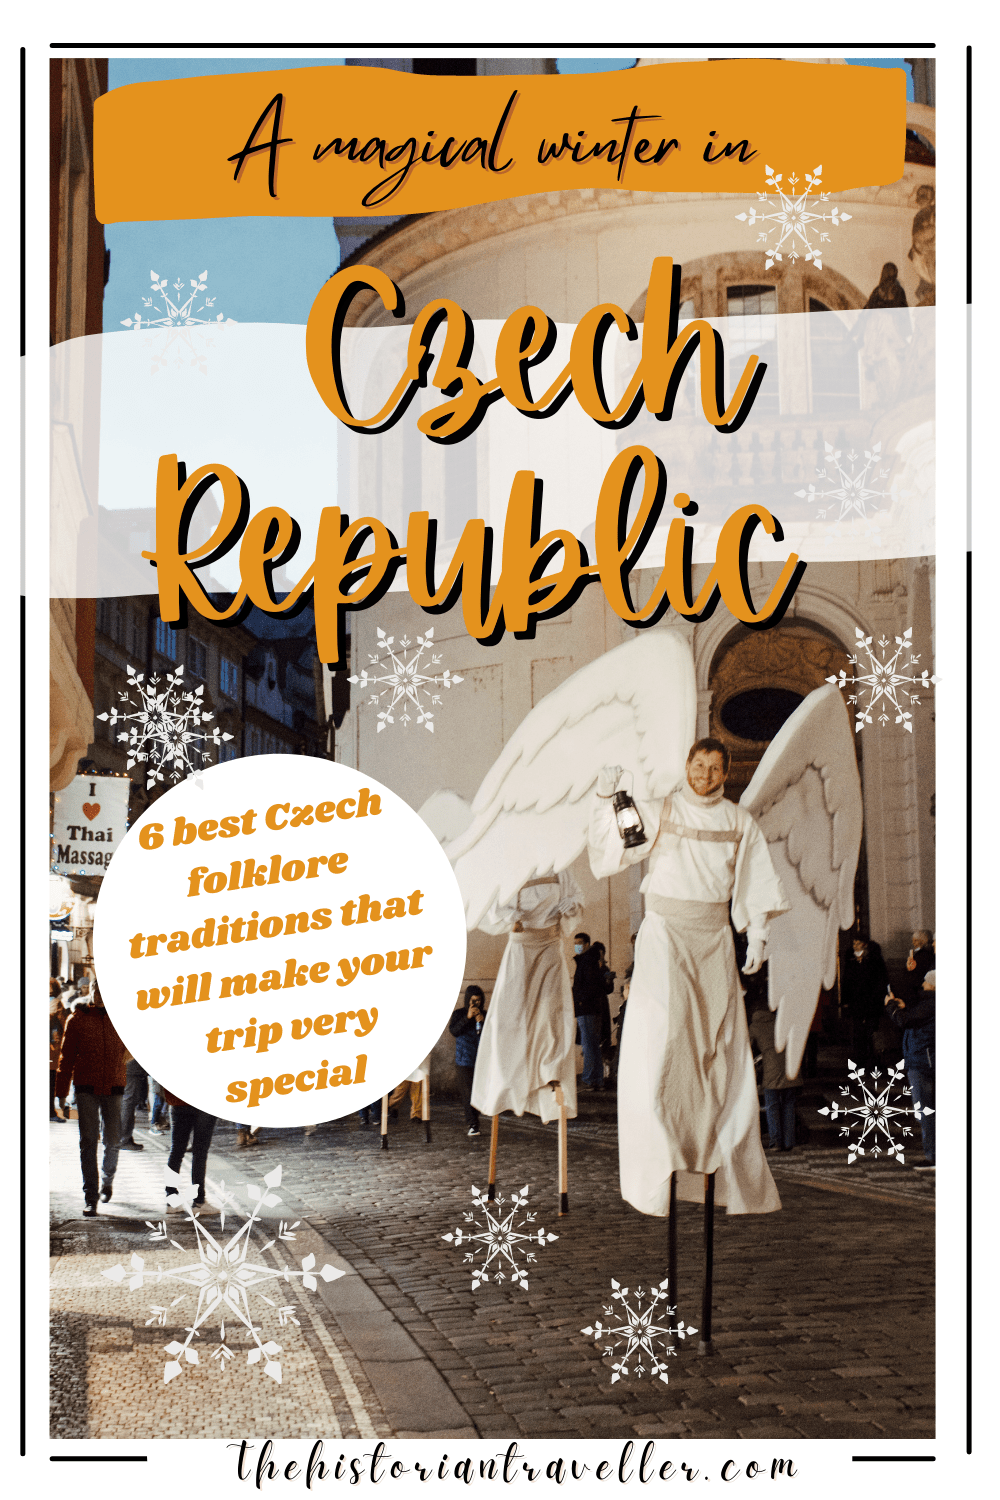 Czech Republic winter traditions